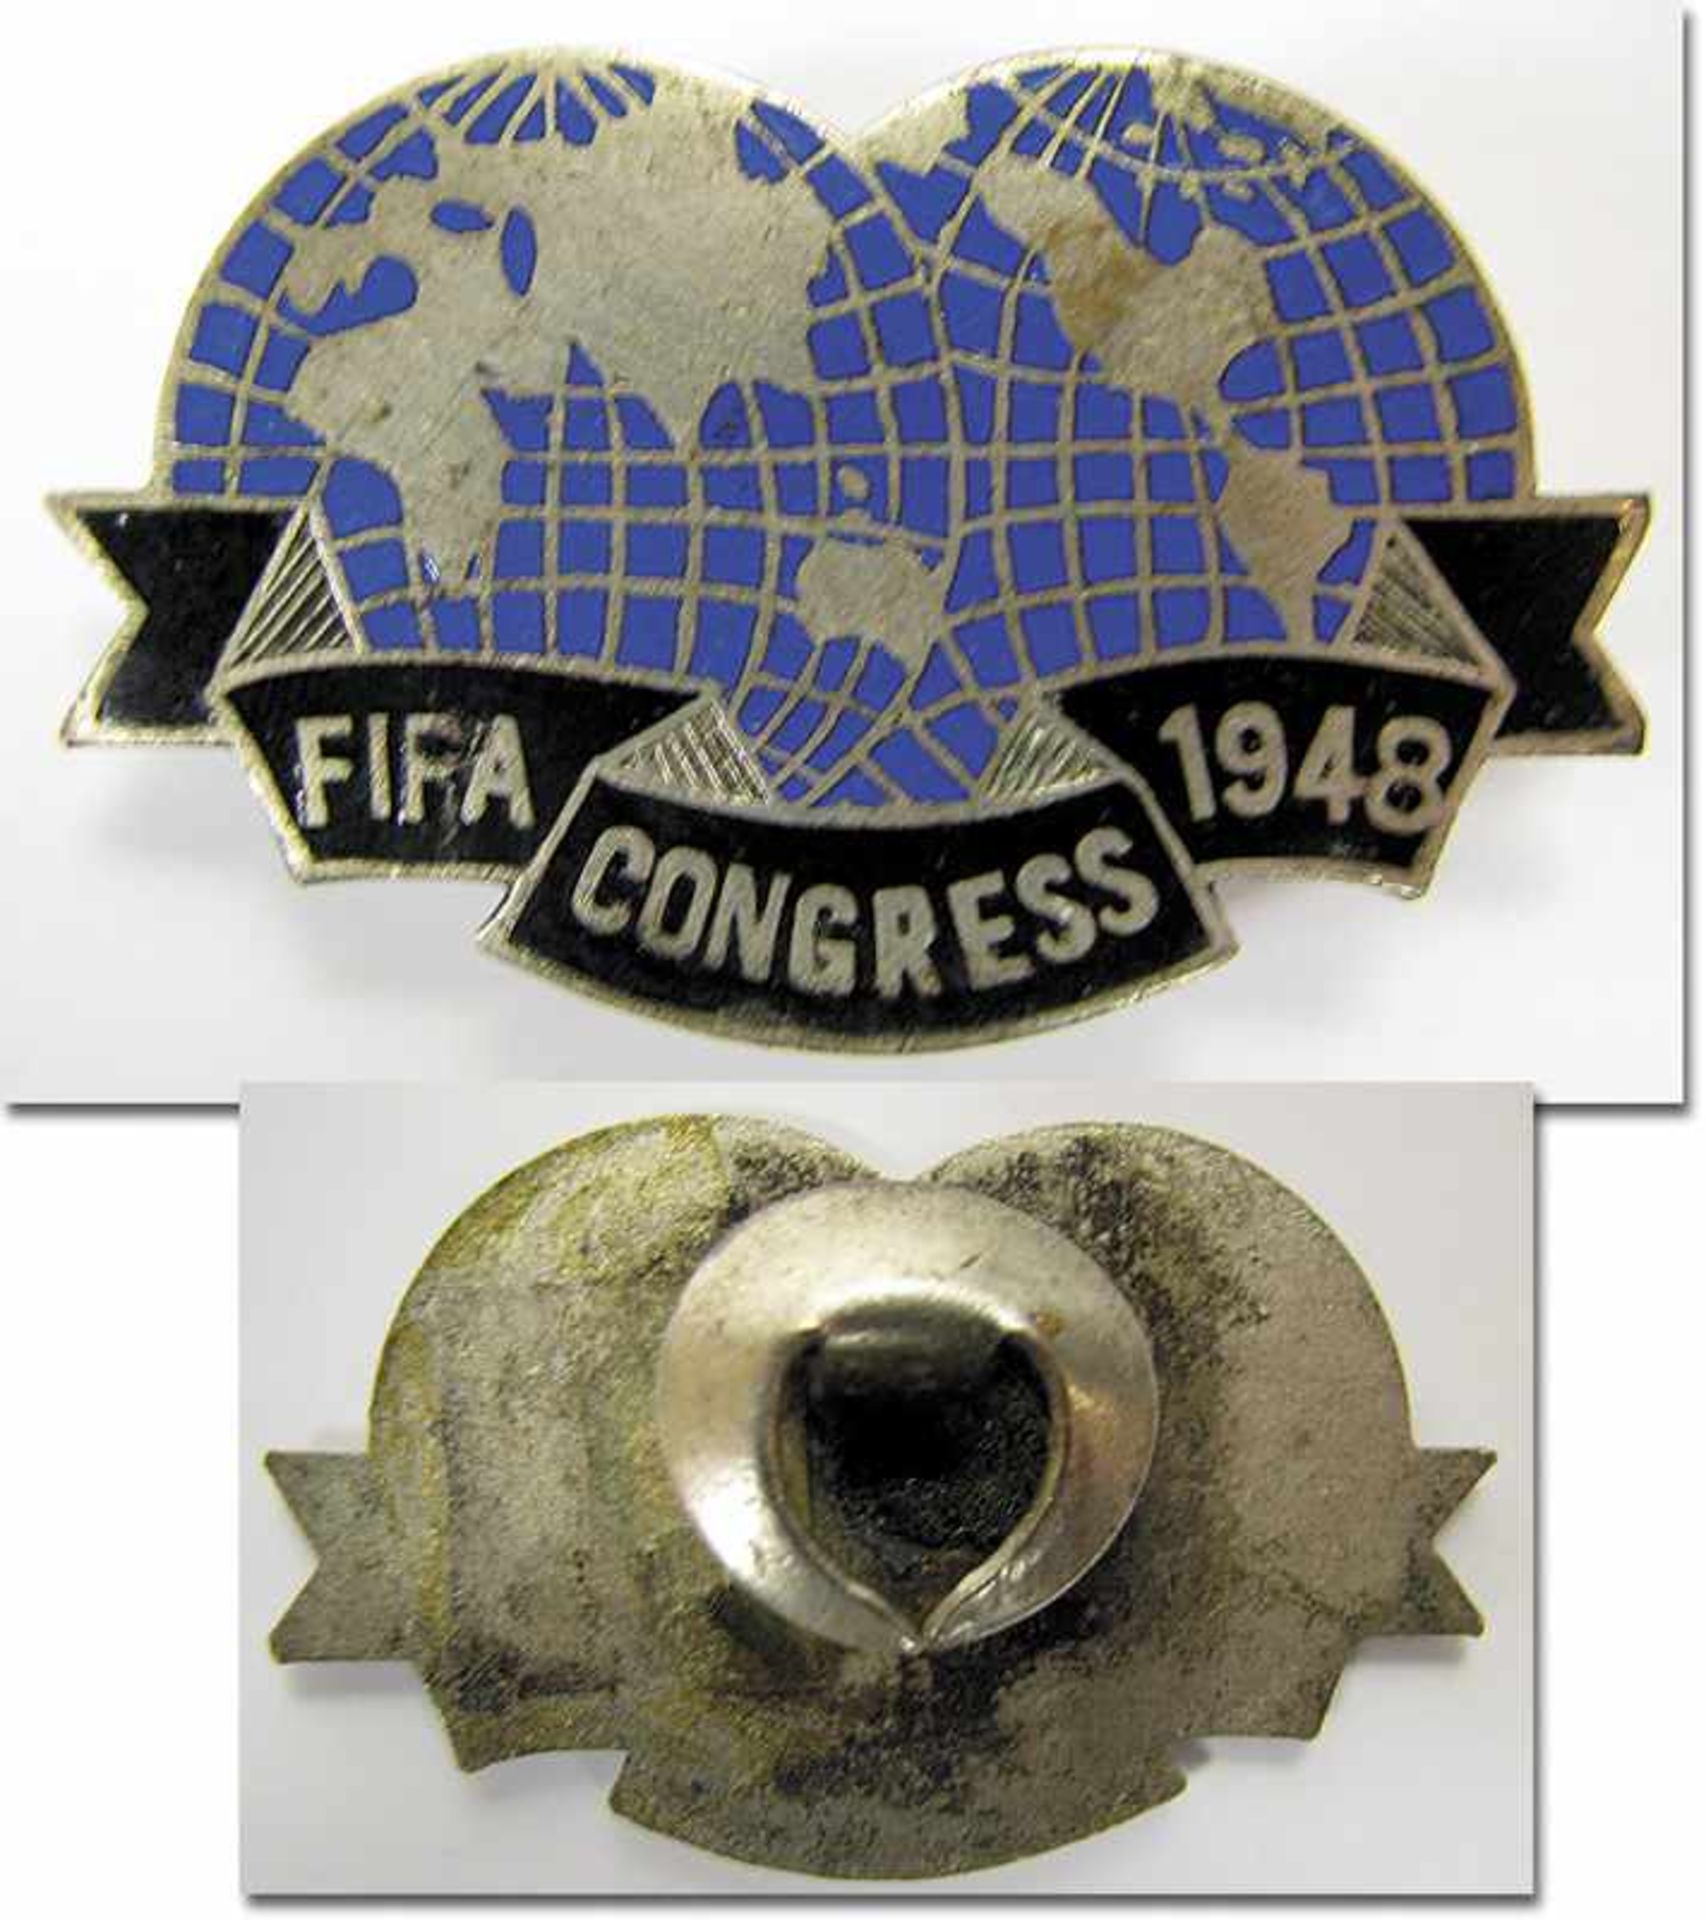 FIFA Congress 1948 Participation badge World Cup - Particiaption badge FIFA Congress 1948 which